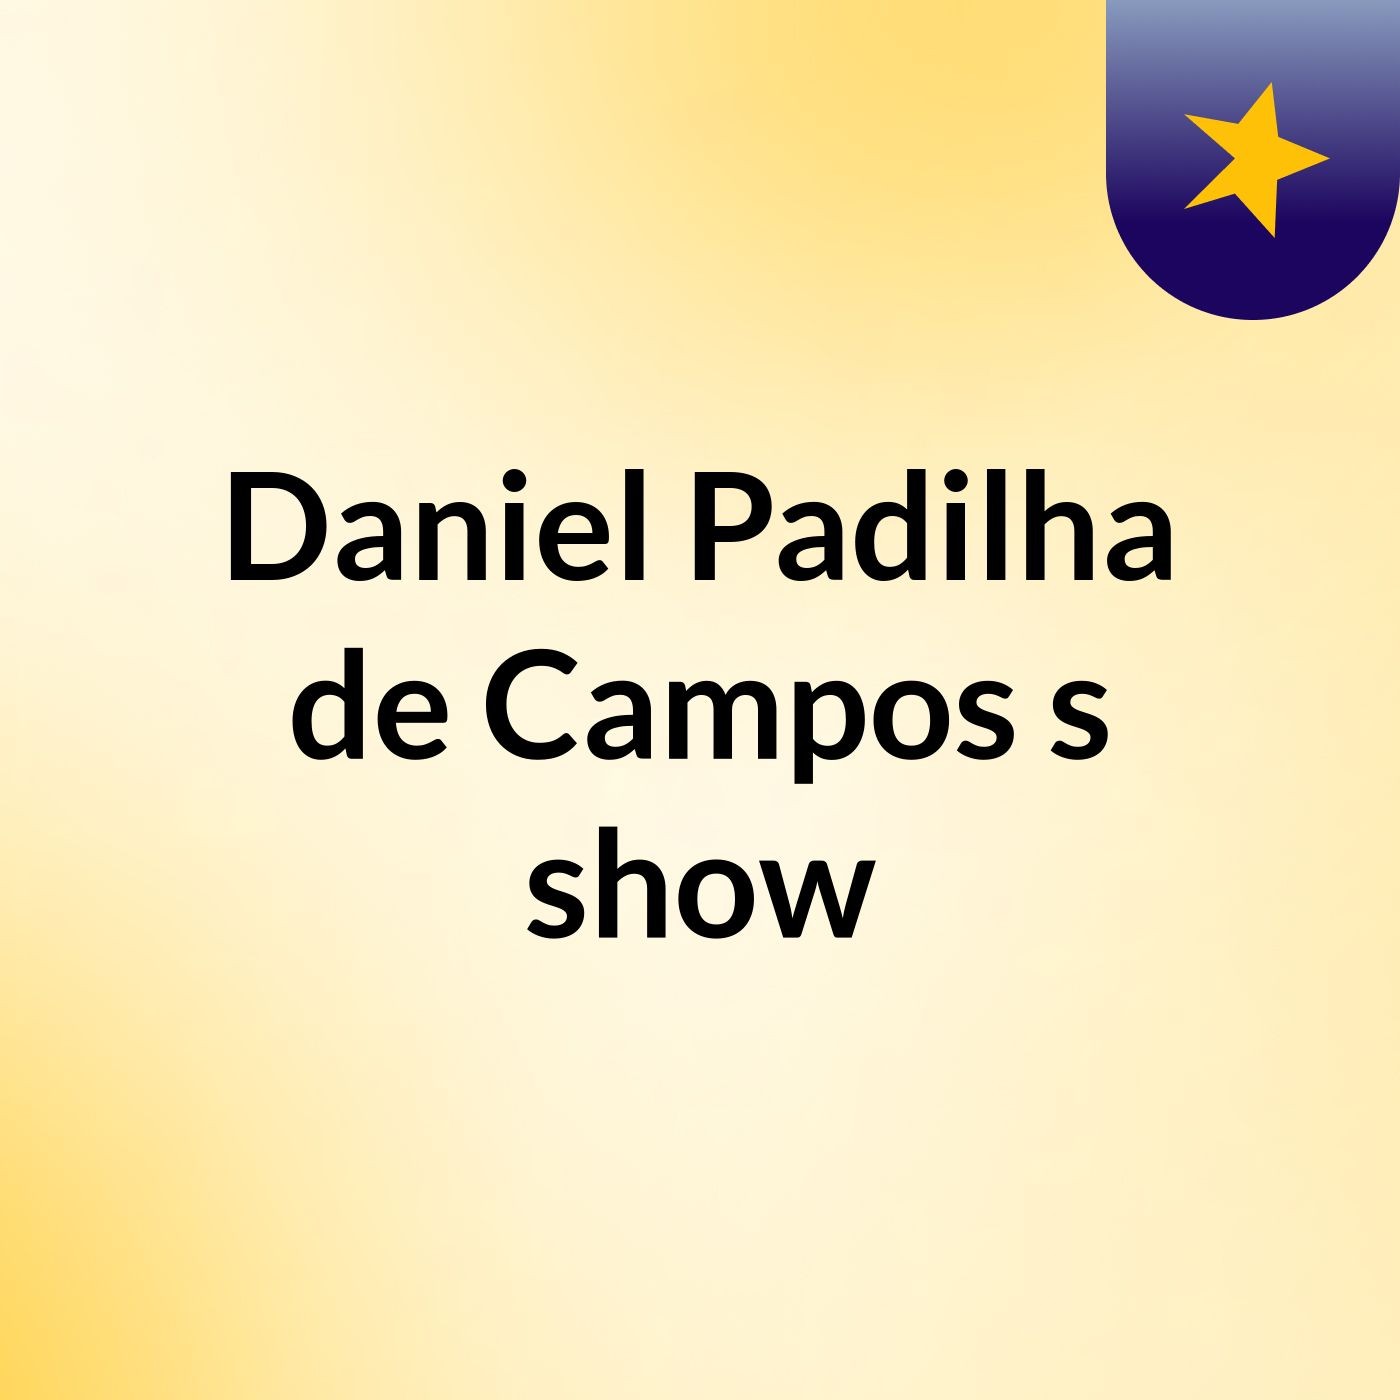 Daniel Padilha de Campos's show